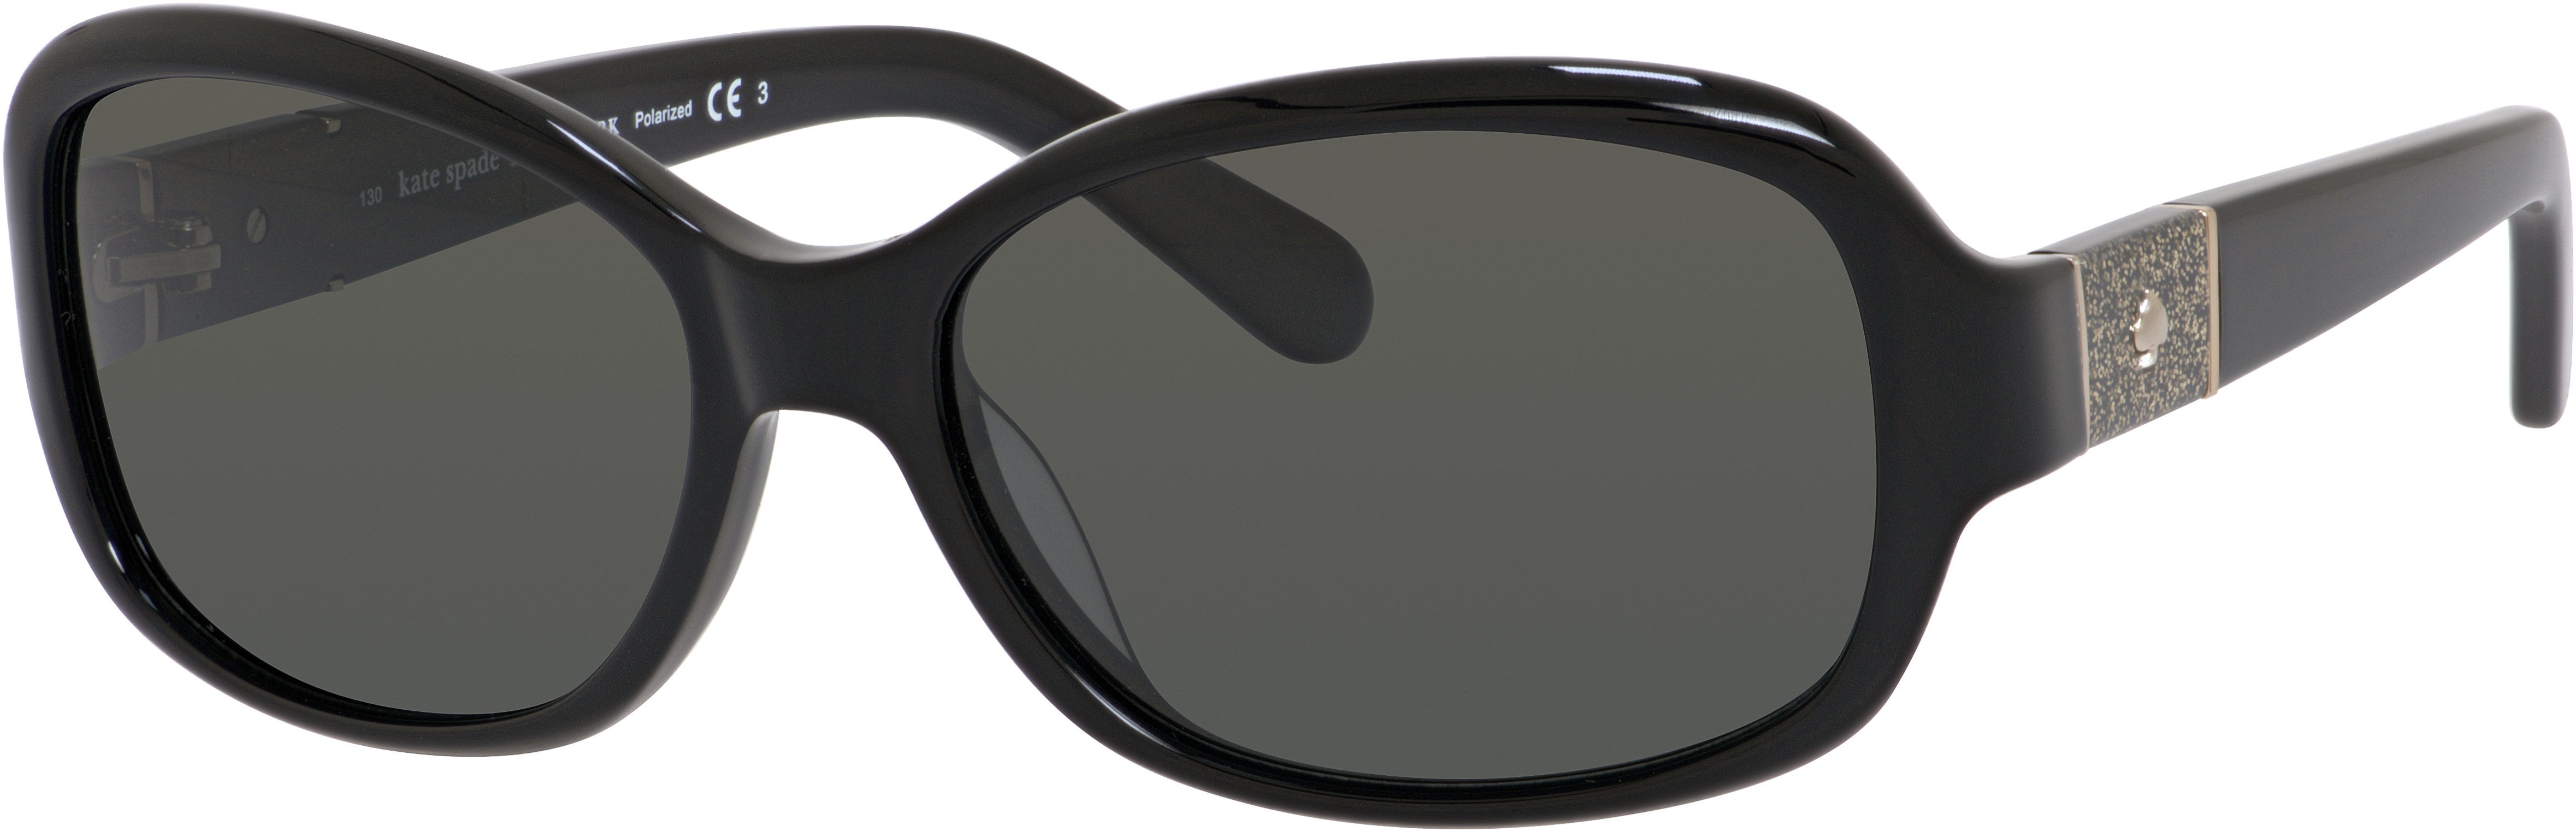 Kate Spade Cheyenne/P/S Oval Modified Sunglasses 807P-807P  Black (RA Gray Polarized)